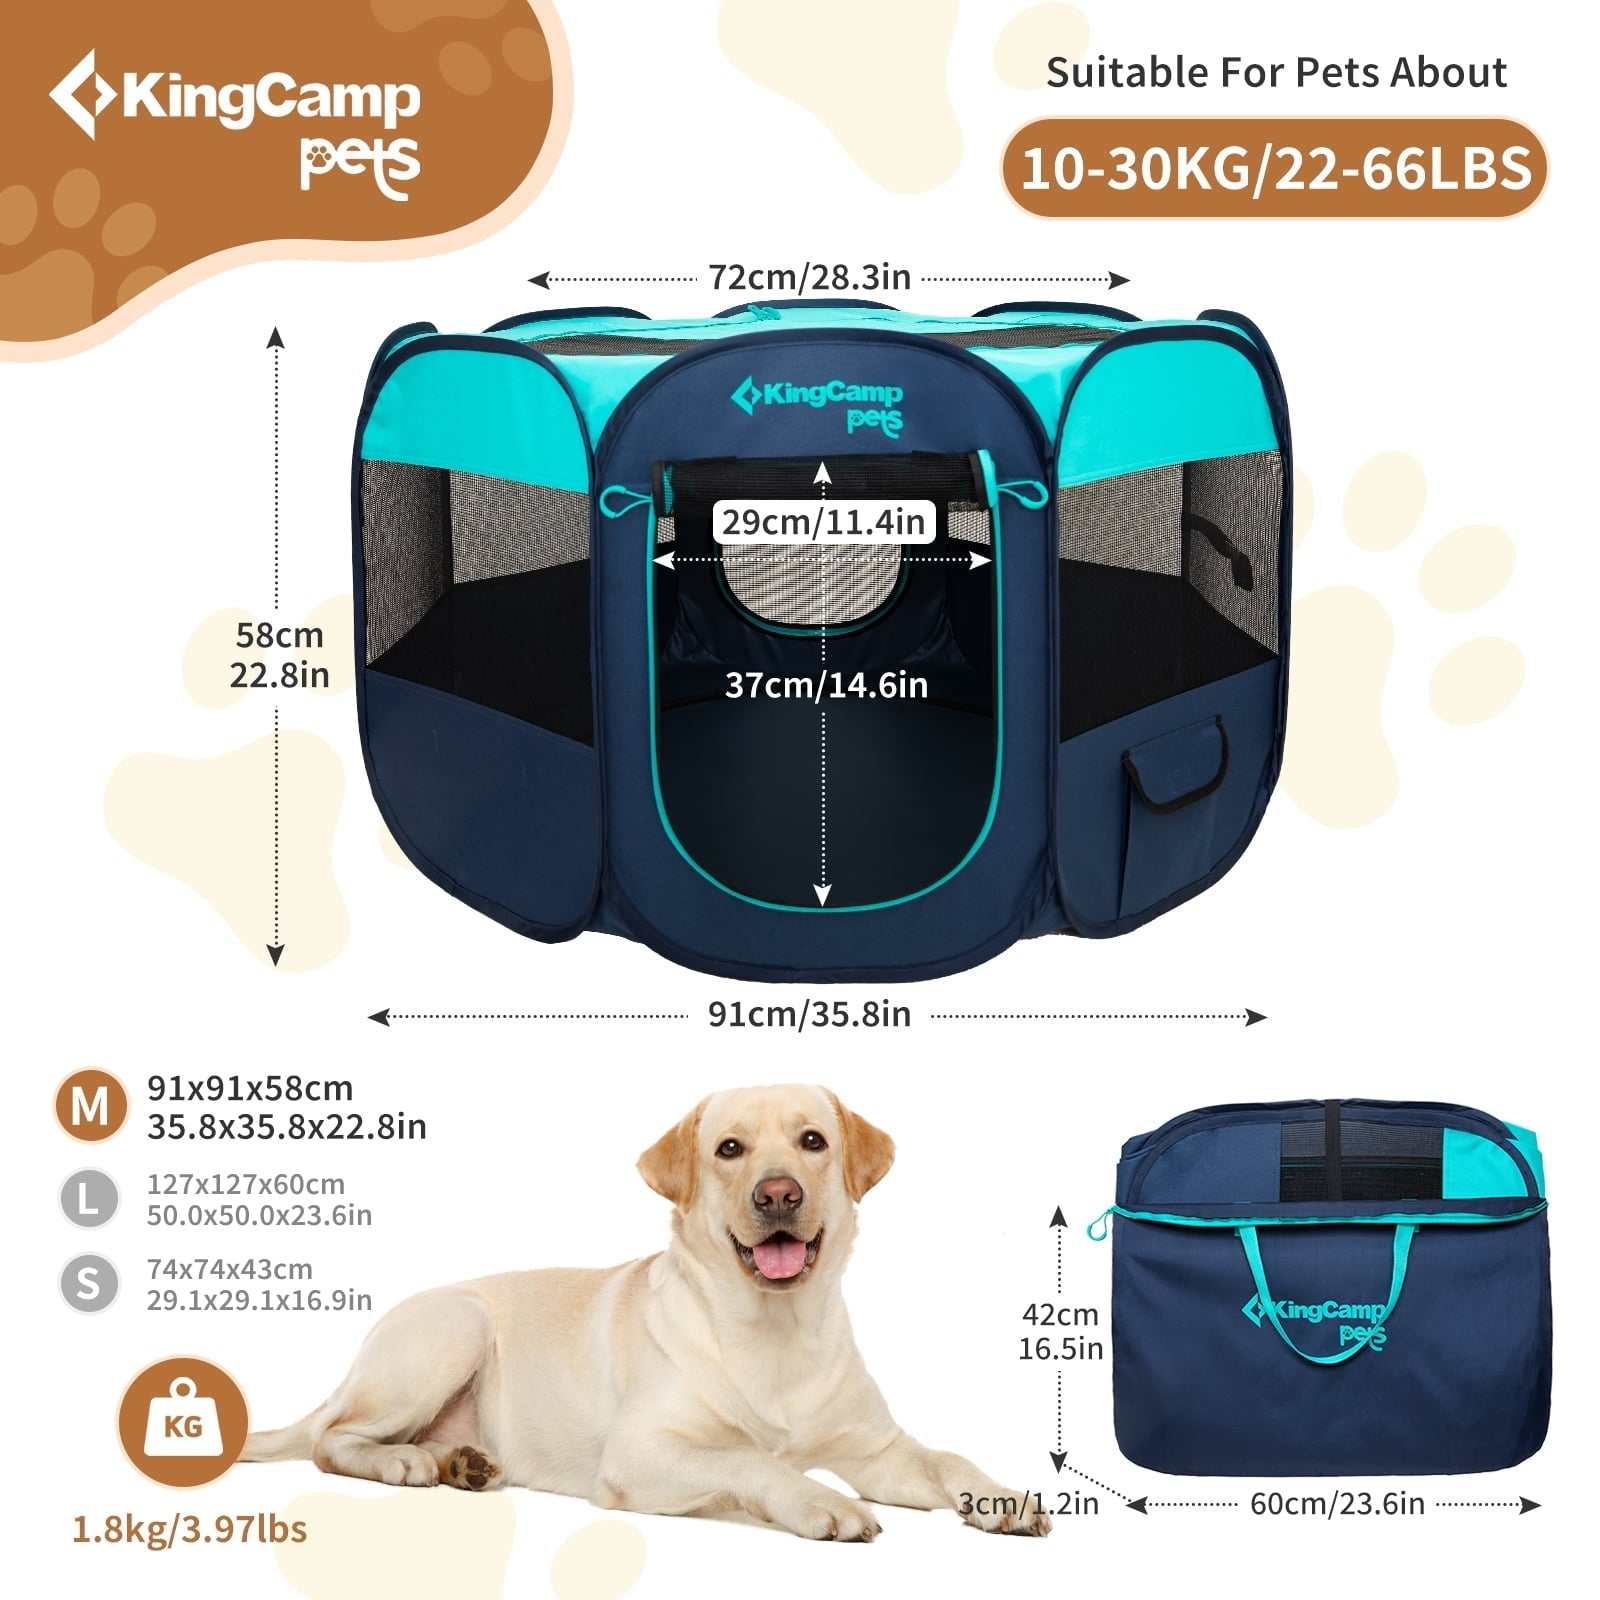 KingCamp PETS ANCONA Dog Playpen